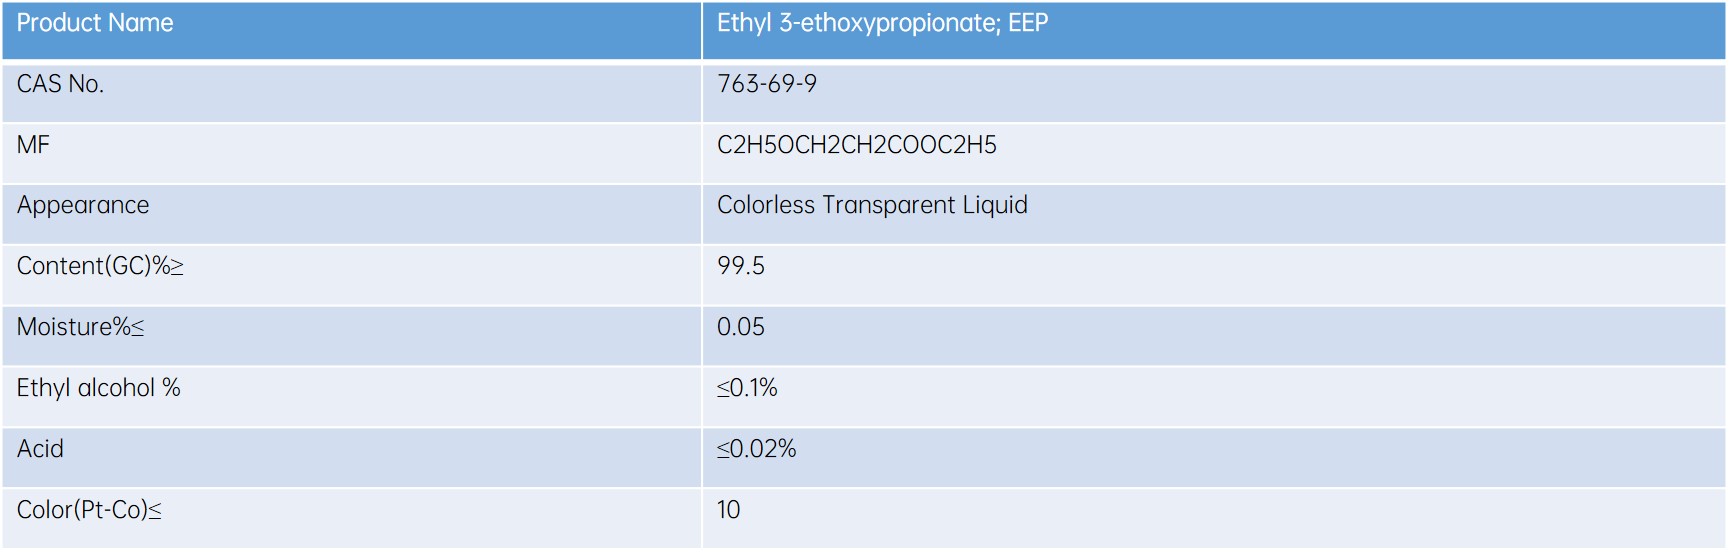 Ethyl 3-ethoxypropionate (EEP)